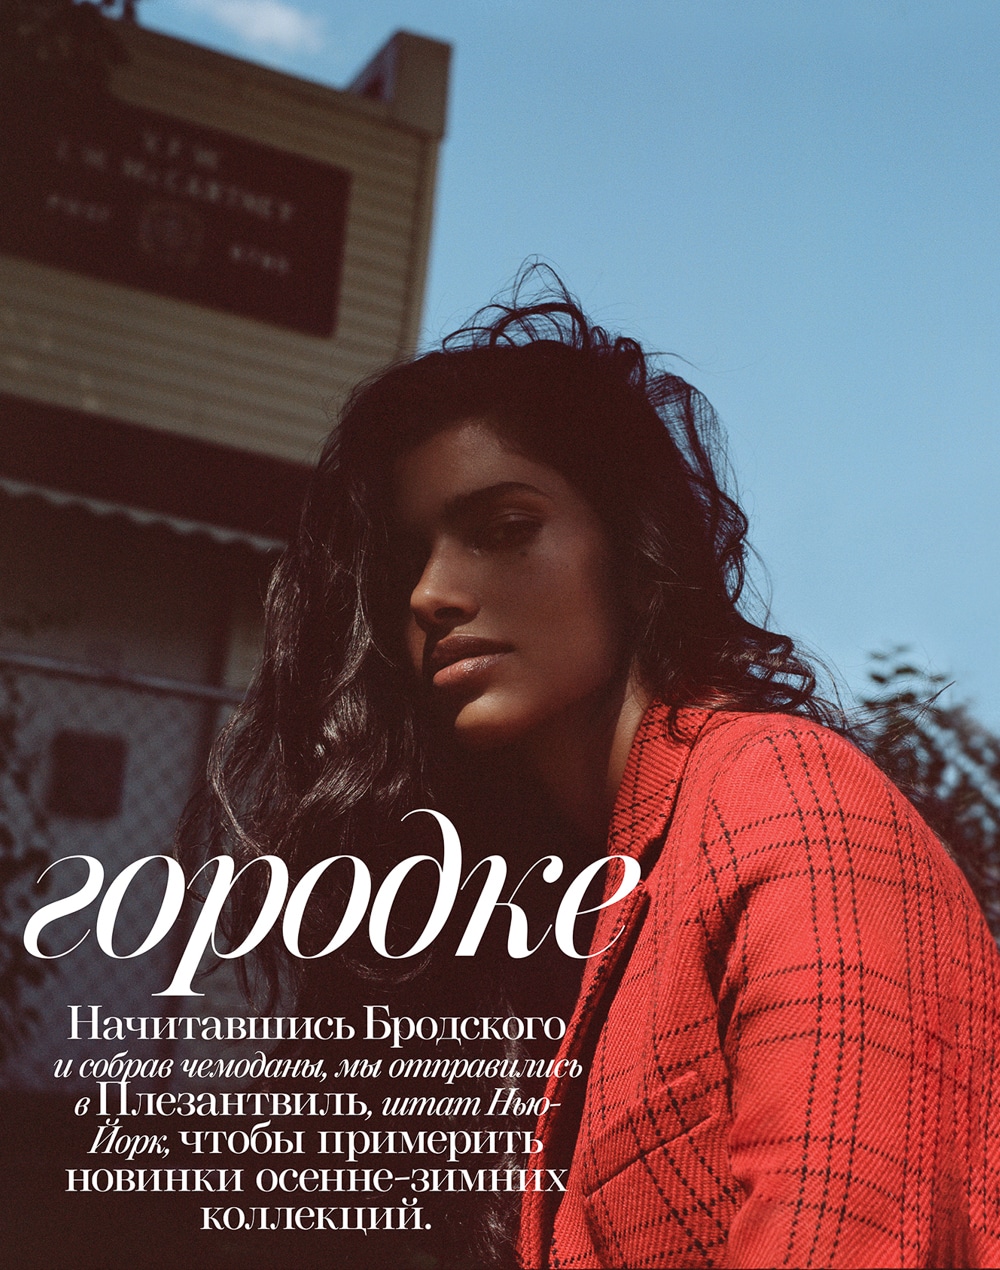 Vogue-Russia-Pooja-Mor-Buzz-White-2.jpg